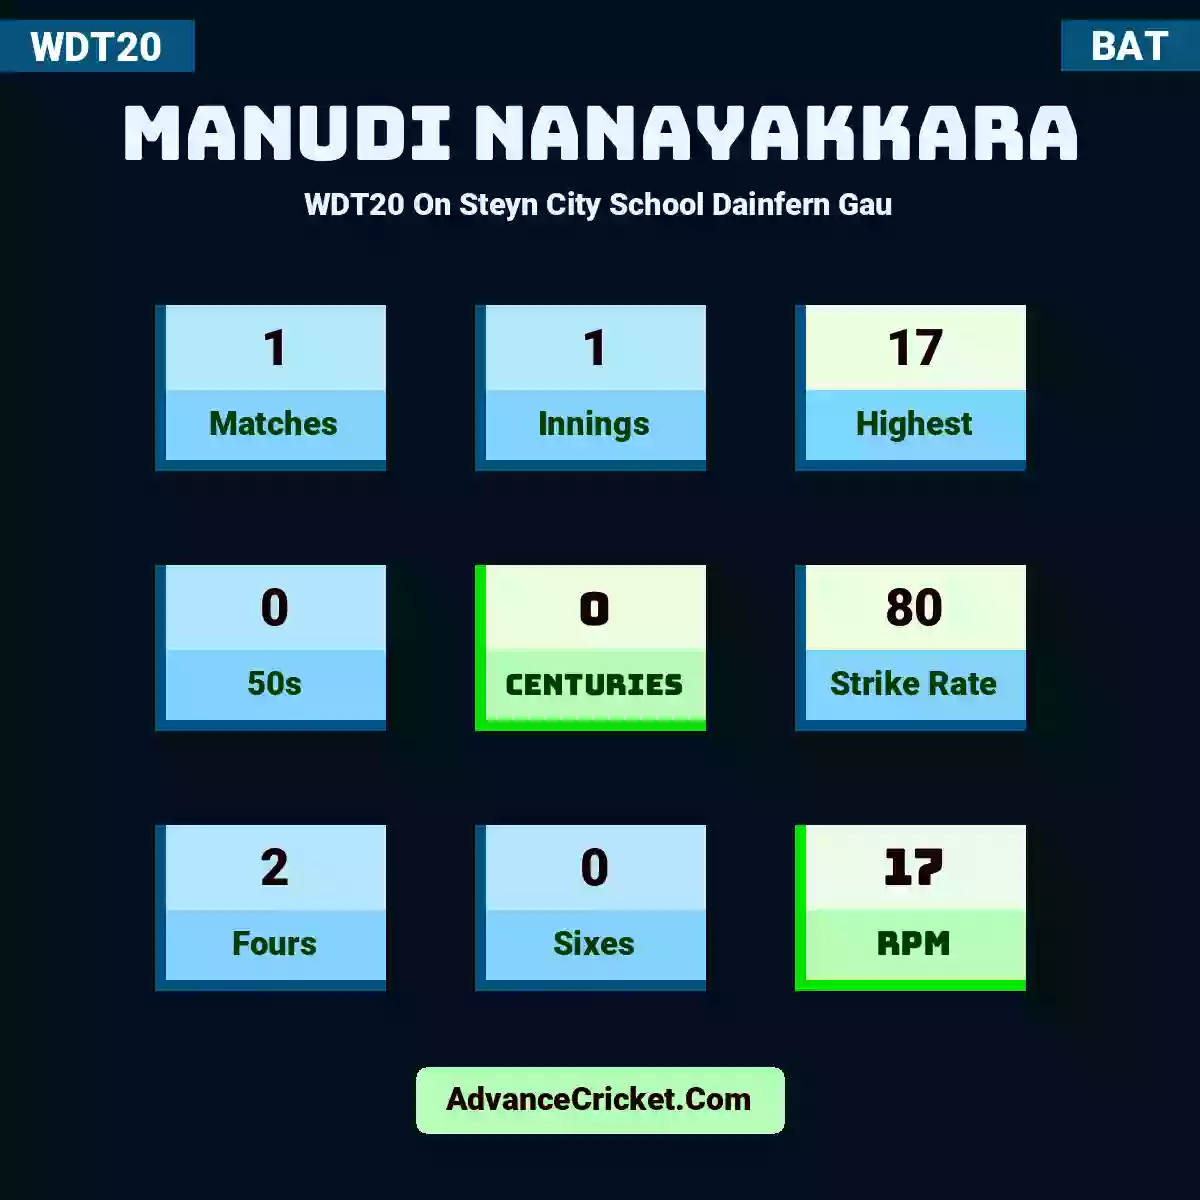 Manudi Nanayakkara WDT20  On Steyn City School Dainfern Gau, Manudi Nanayakkara played 1 matches, scored 17 runs as highest, 0 half-centuries, and 0 centuries, with a strike rate of 80. M.Nanayakkara hit 2 fours and 0 sixes, with an RPM of 17.